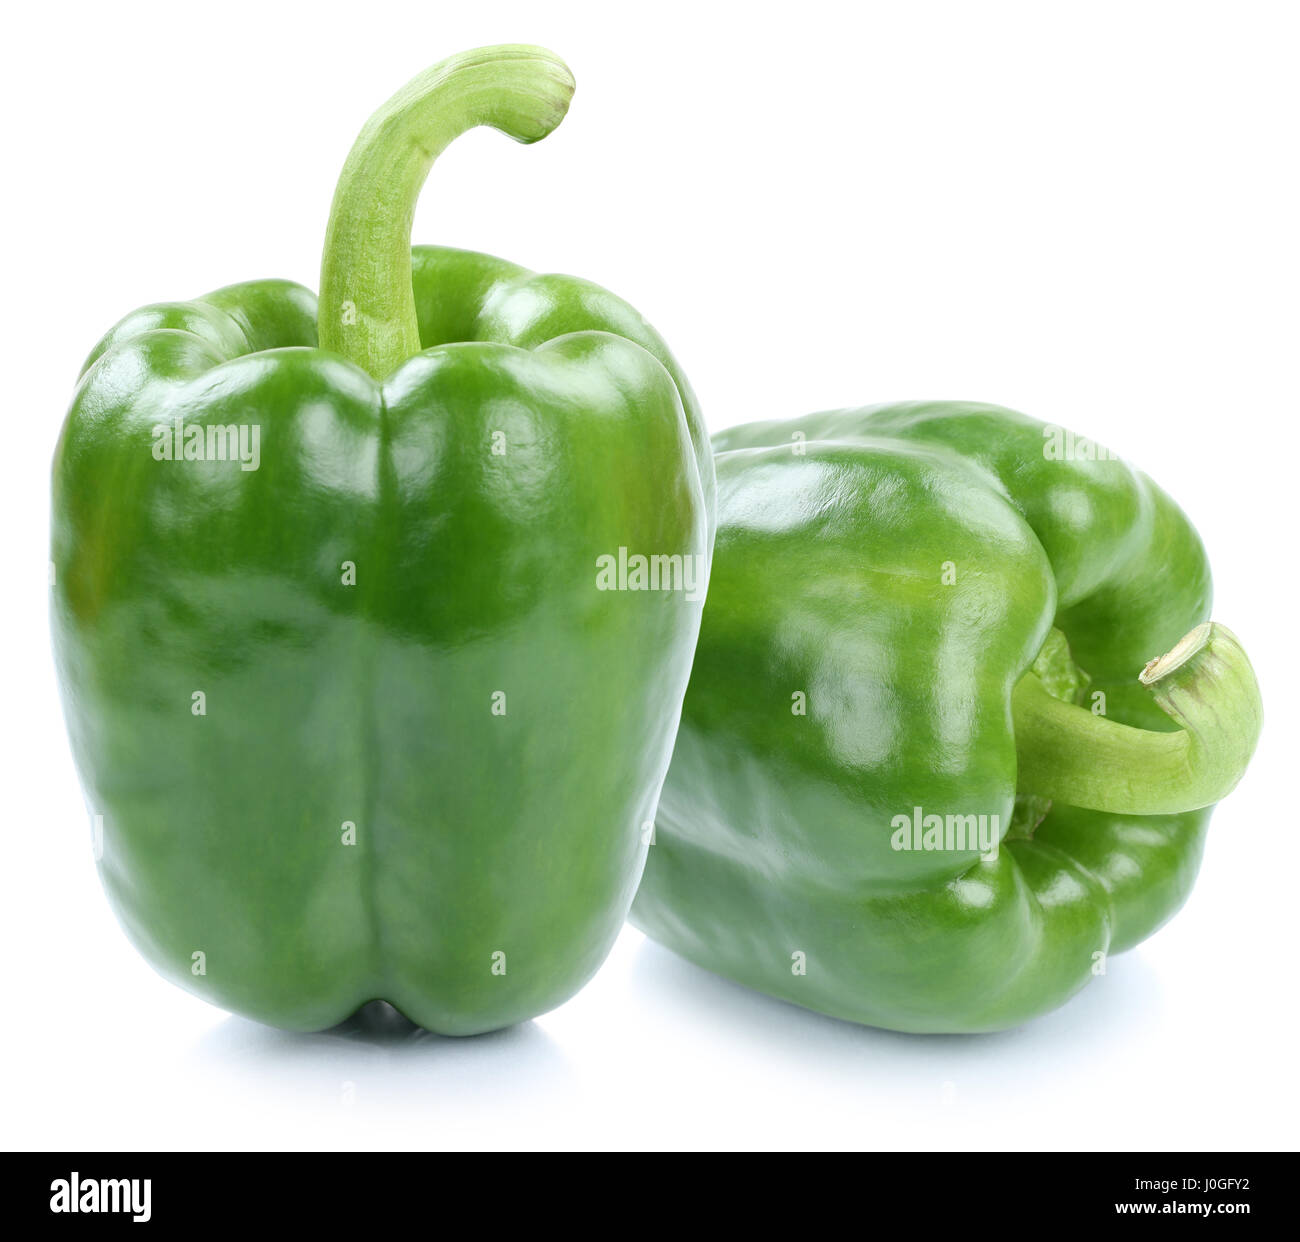 Peperone verde peperoni paprica vegetale paprikas isolato su uno sfondo bianco Foto Stock